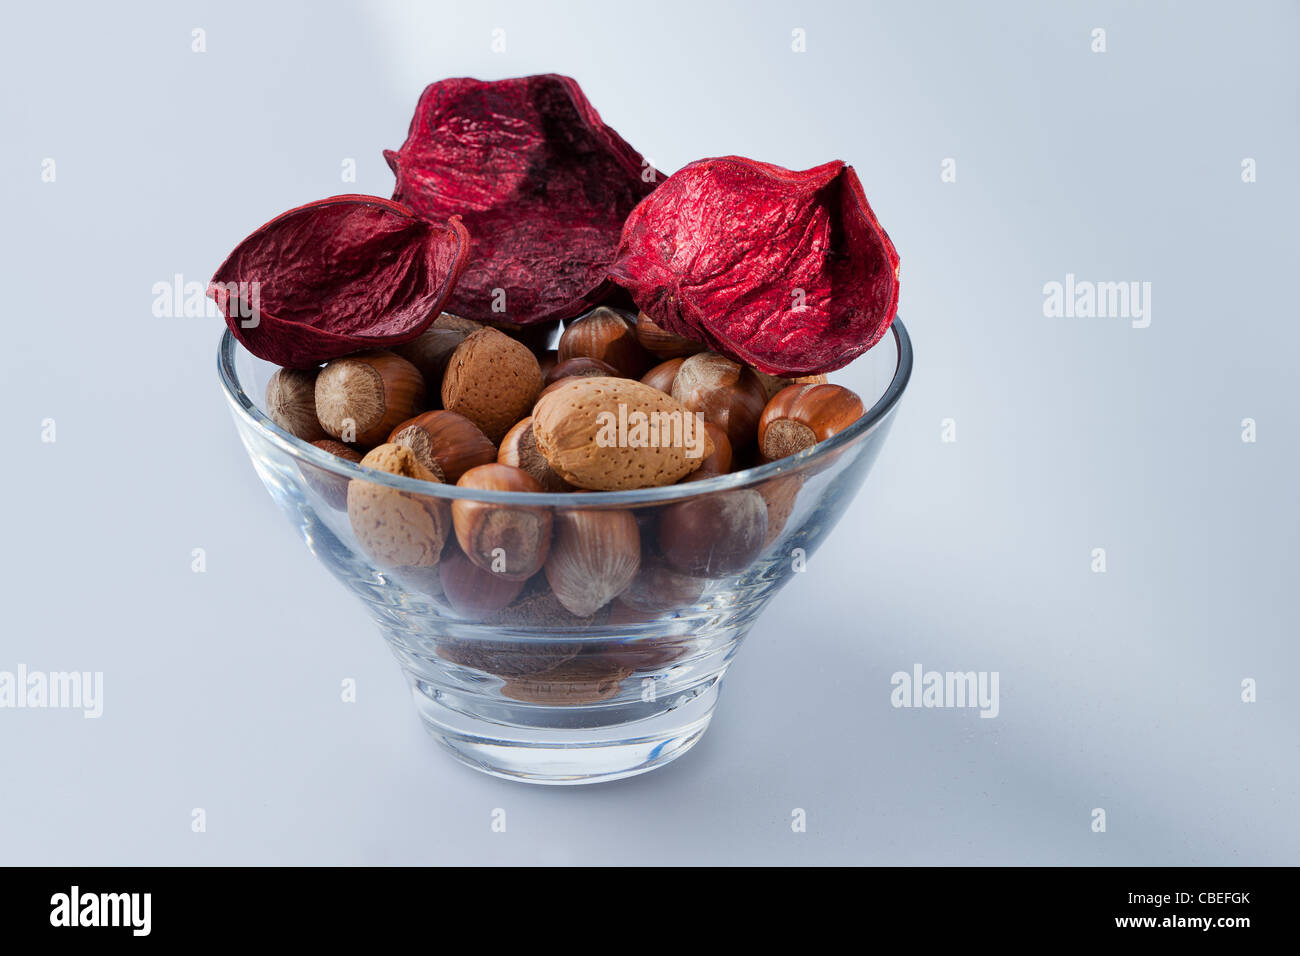 Christmas nuts Stock Photo